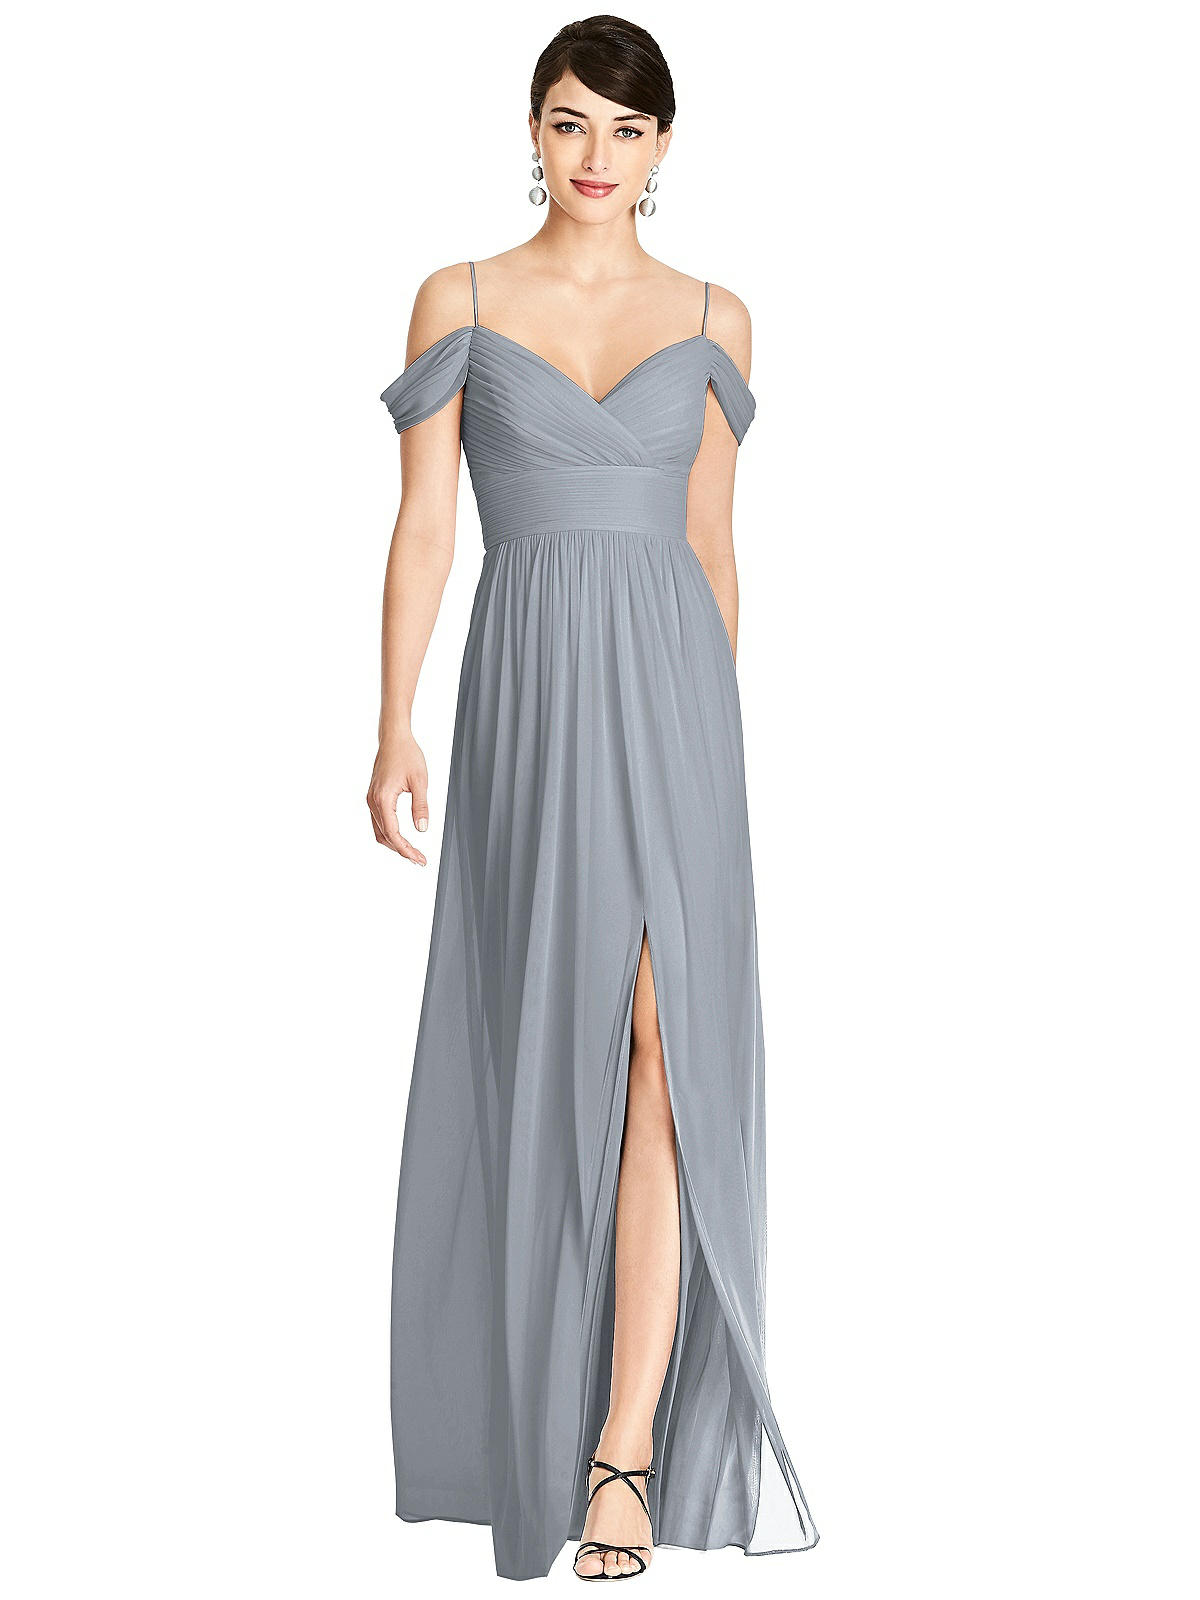 GLOWMODE Ribbed Modal Goddess Activewear Maxi Dress